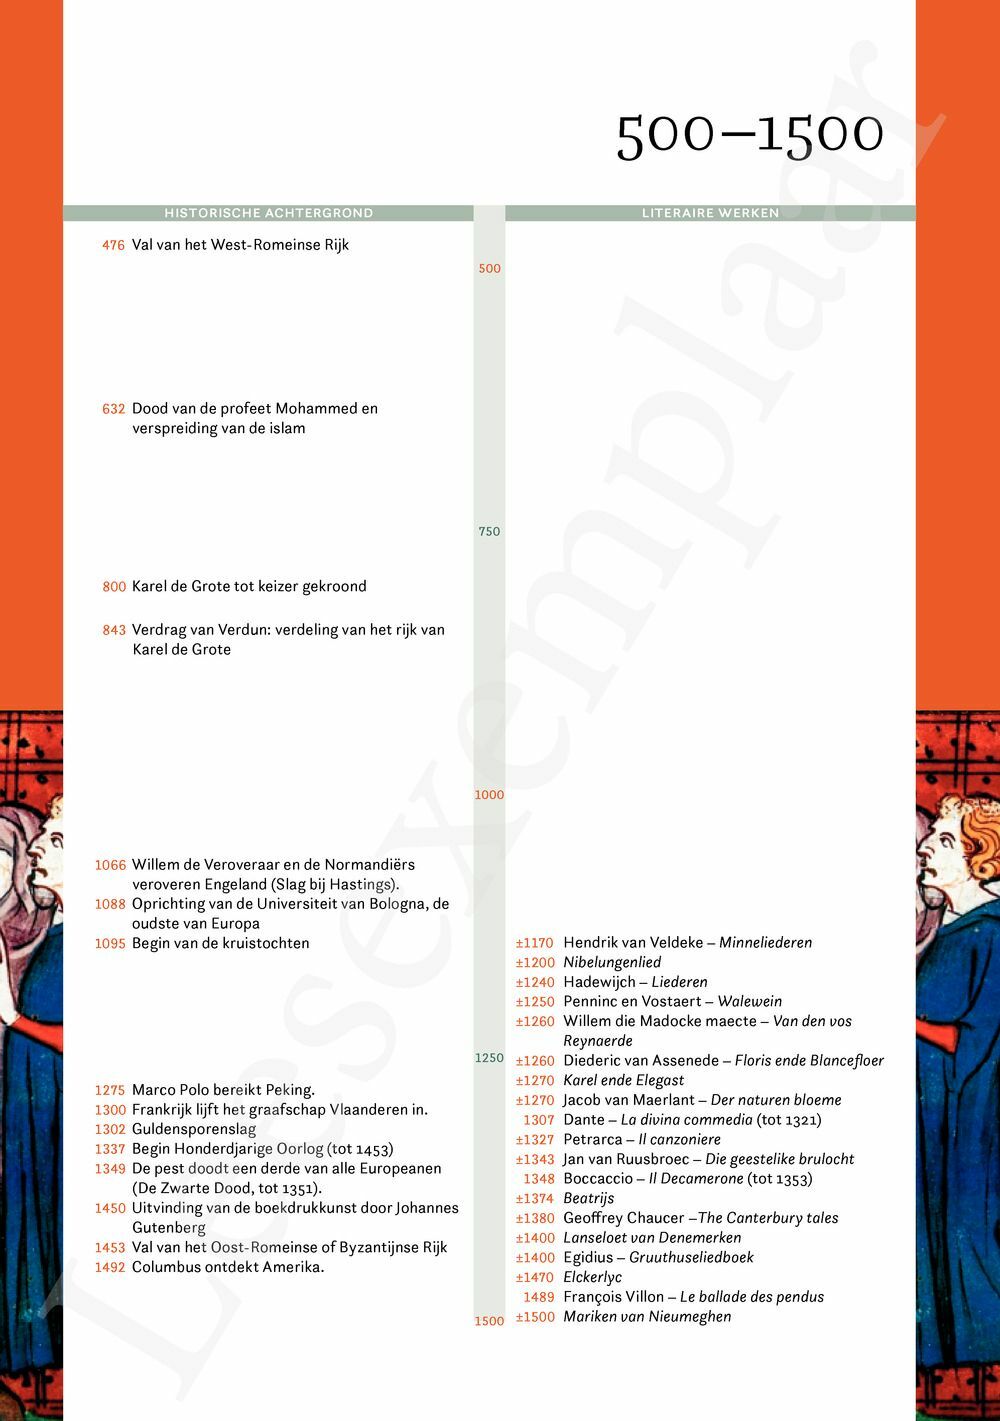 Preview: Campus Nederlands 5/6 Basisboek (incl. Pelckmans Portaal)